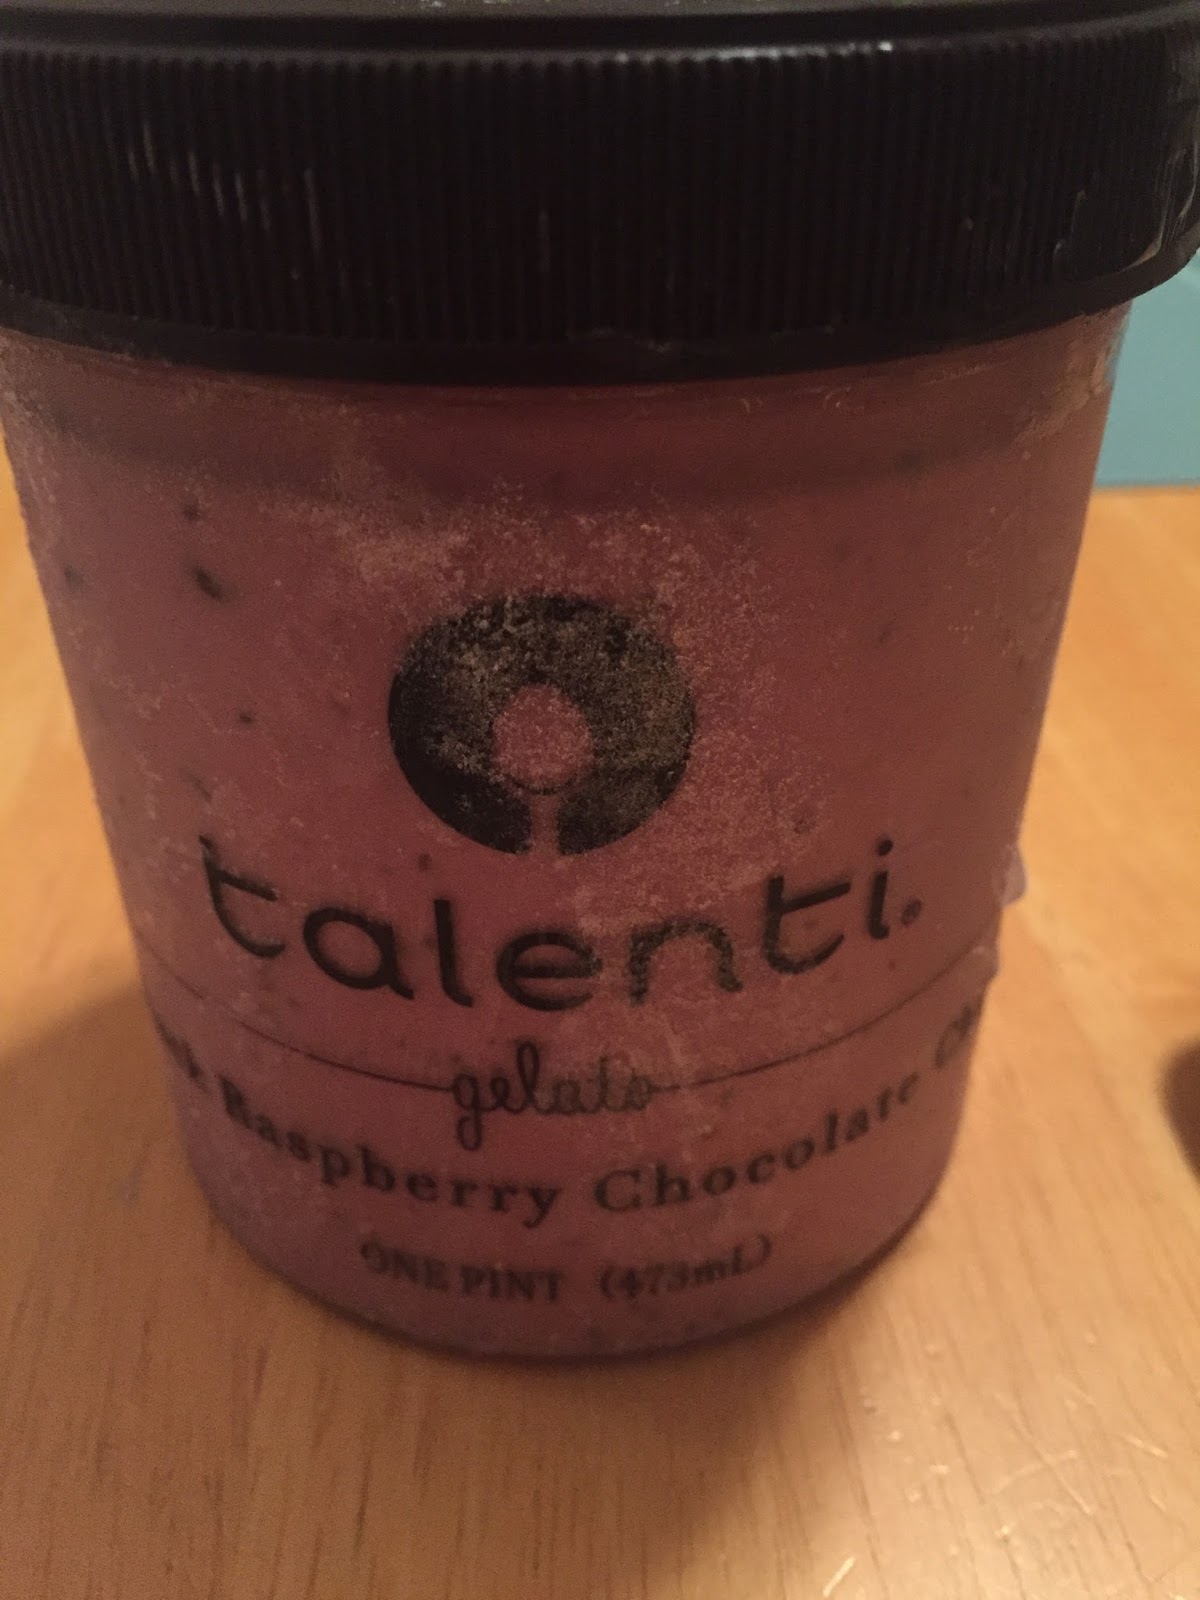 Talenti Gelato Black Raspberry Chocolate Chip 1 pint